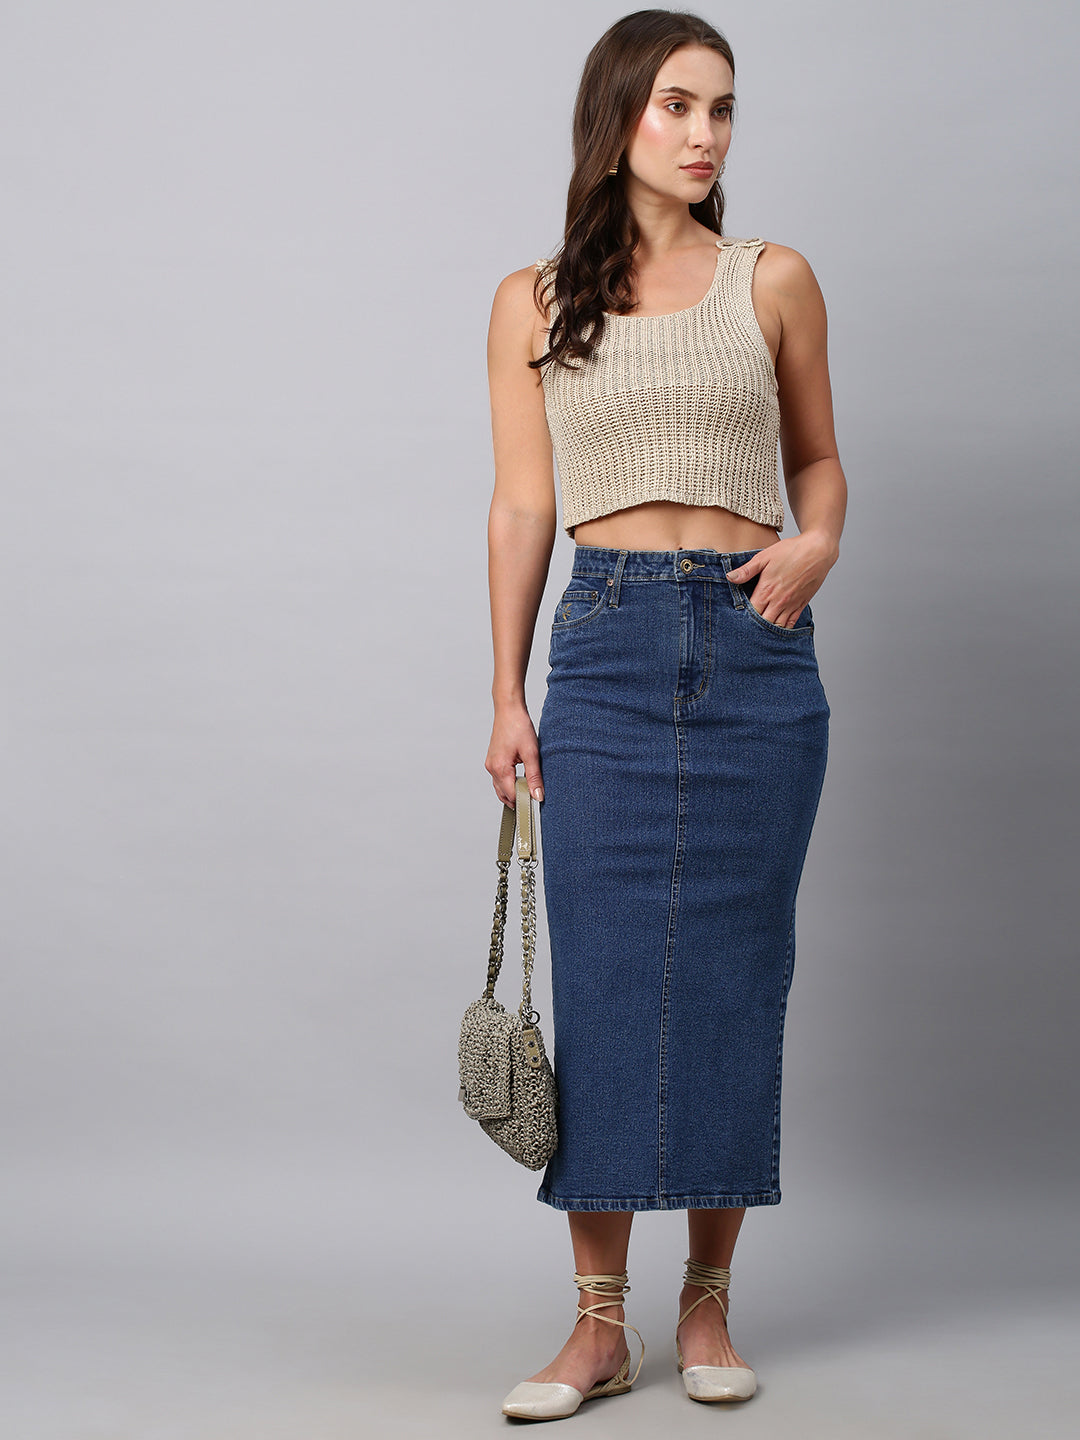 Plus Size Skirts: Maxi, Denim, Pencil & More | Lane Bryant